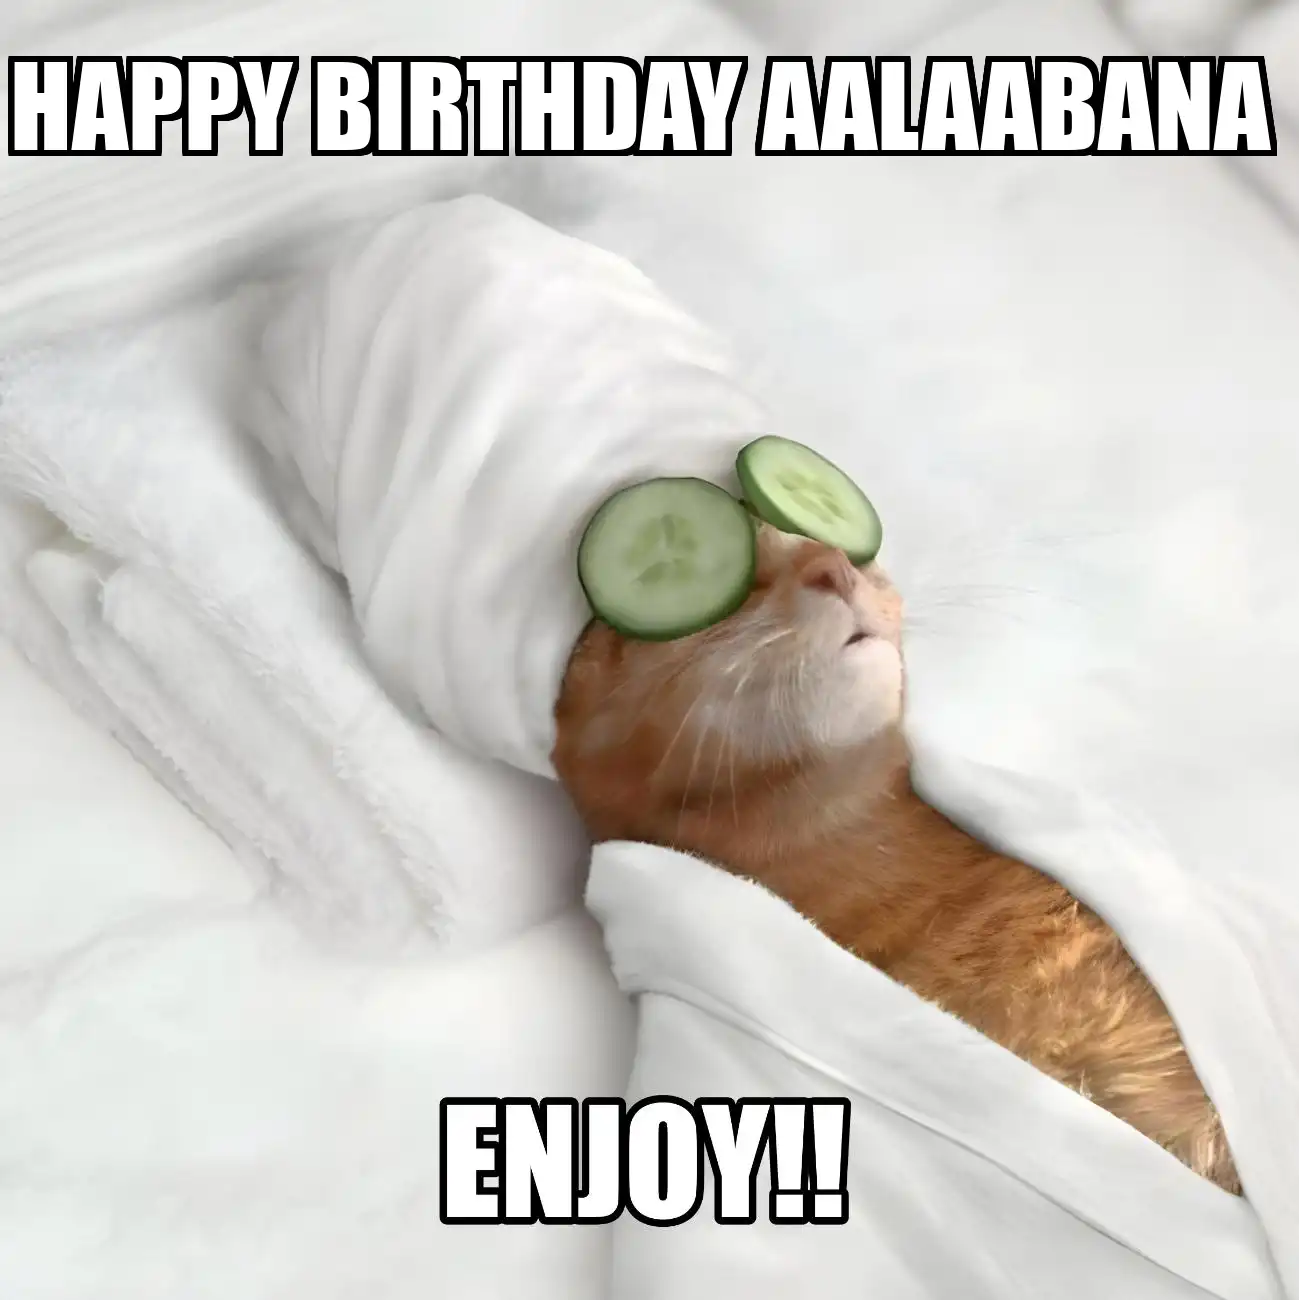 Happy Birthday Aalaabana Enjoy Cat Meme